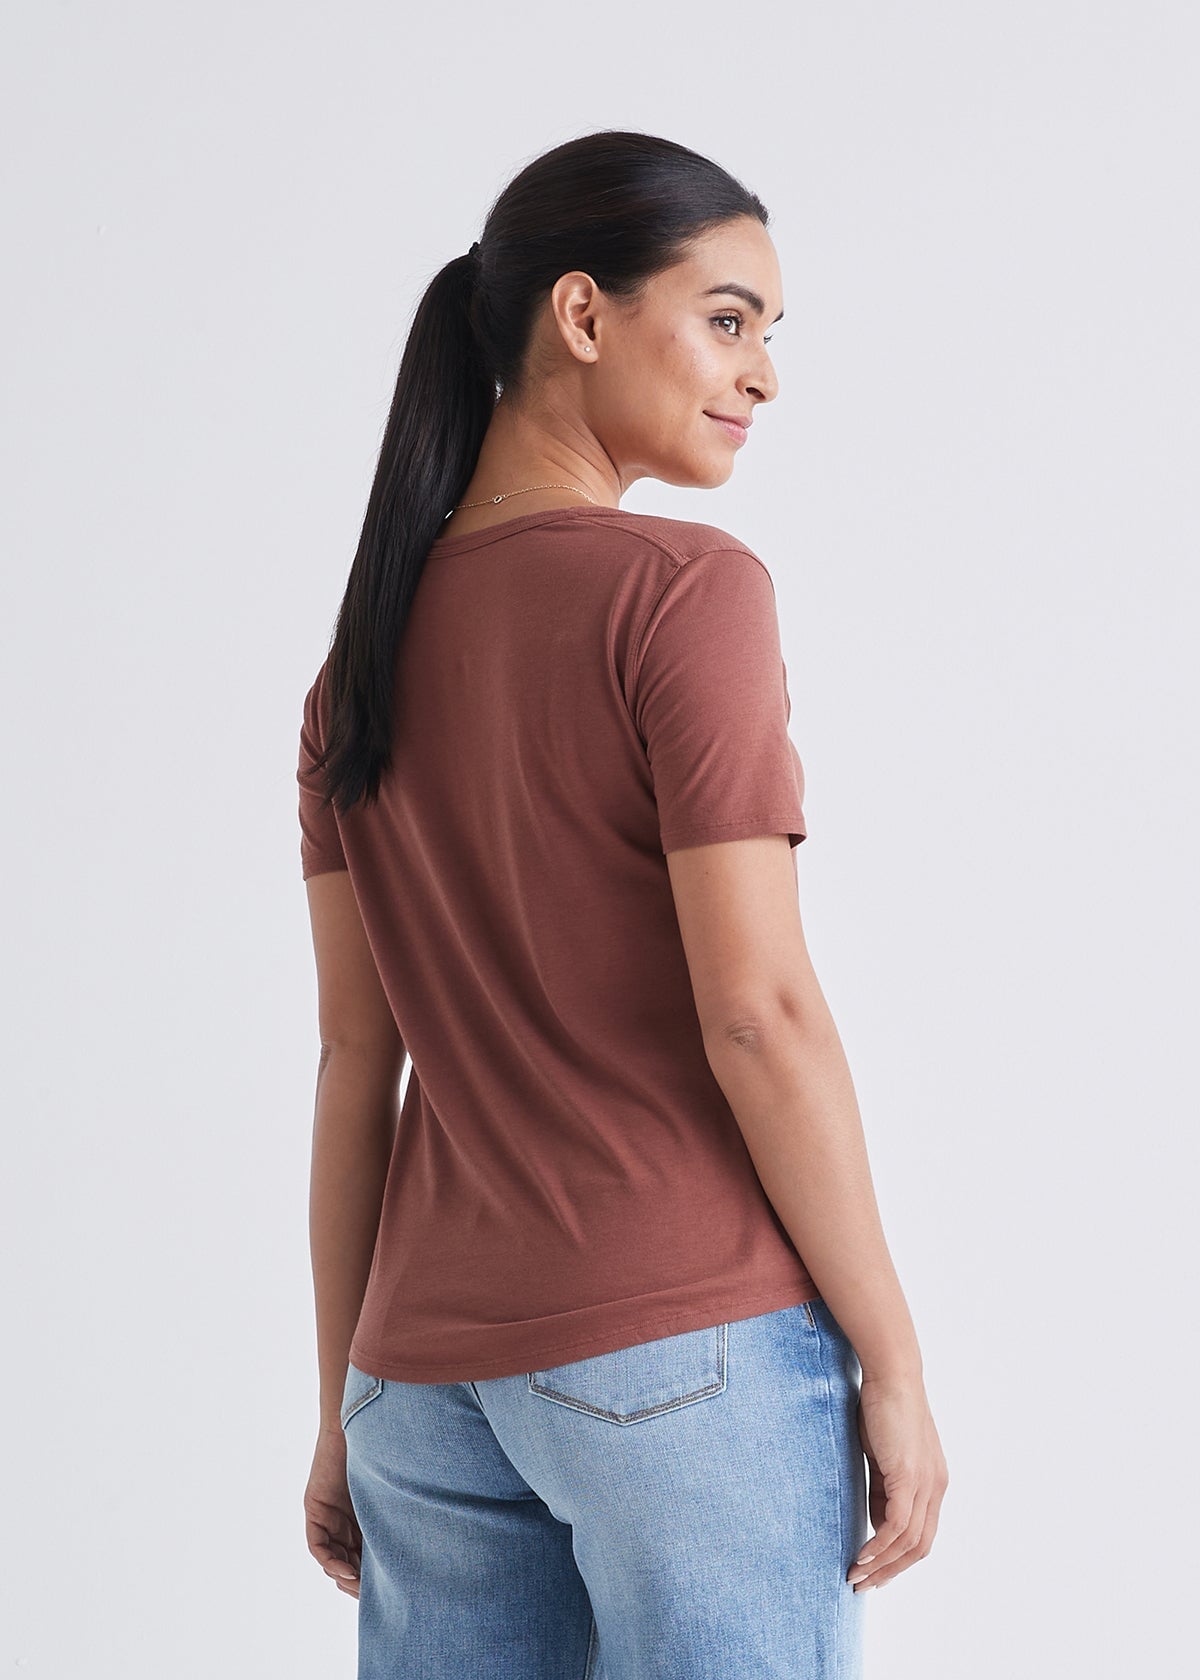 womens soft lightweight reddish-brown v-neck t-shirt back